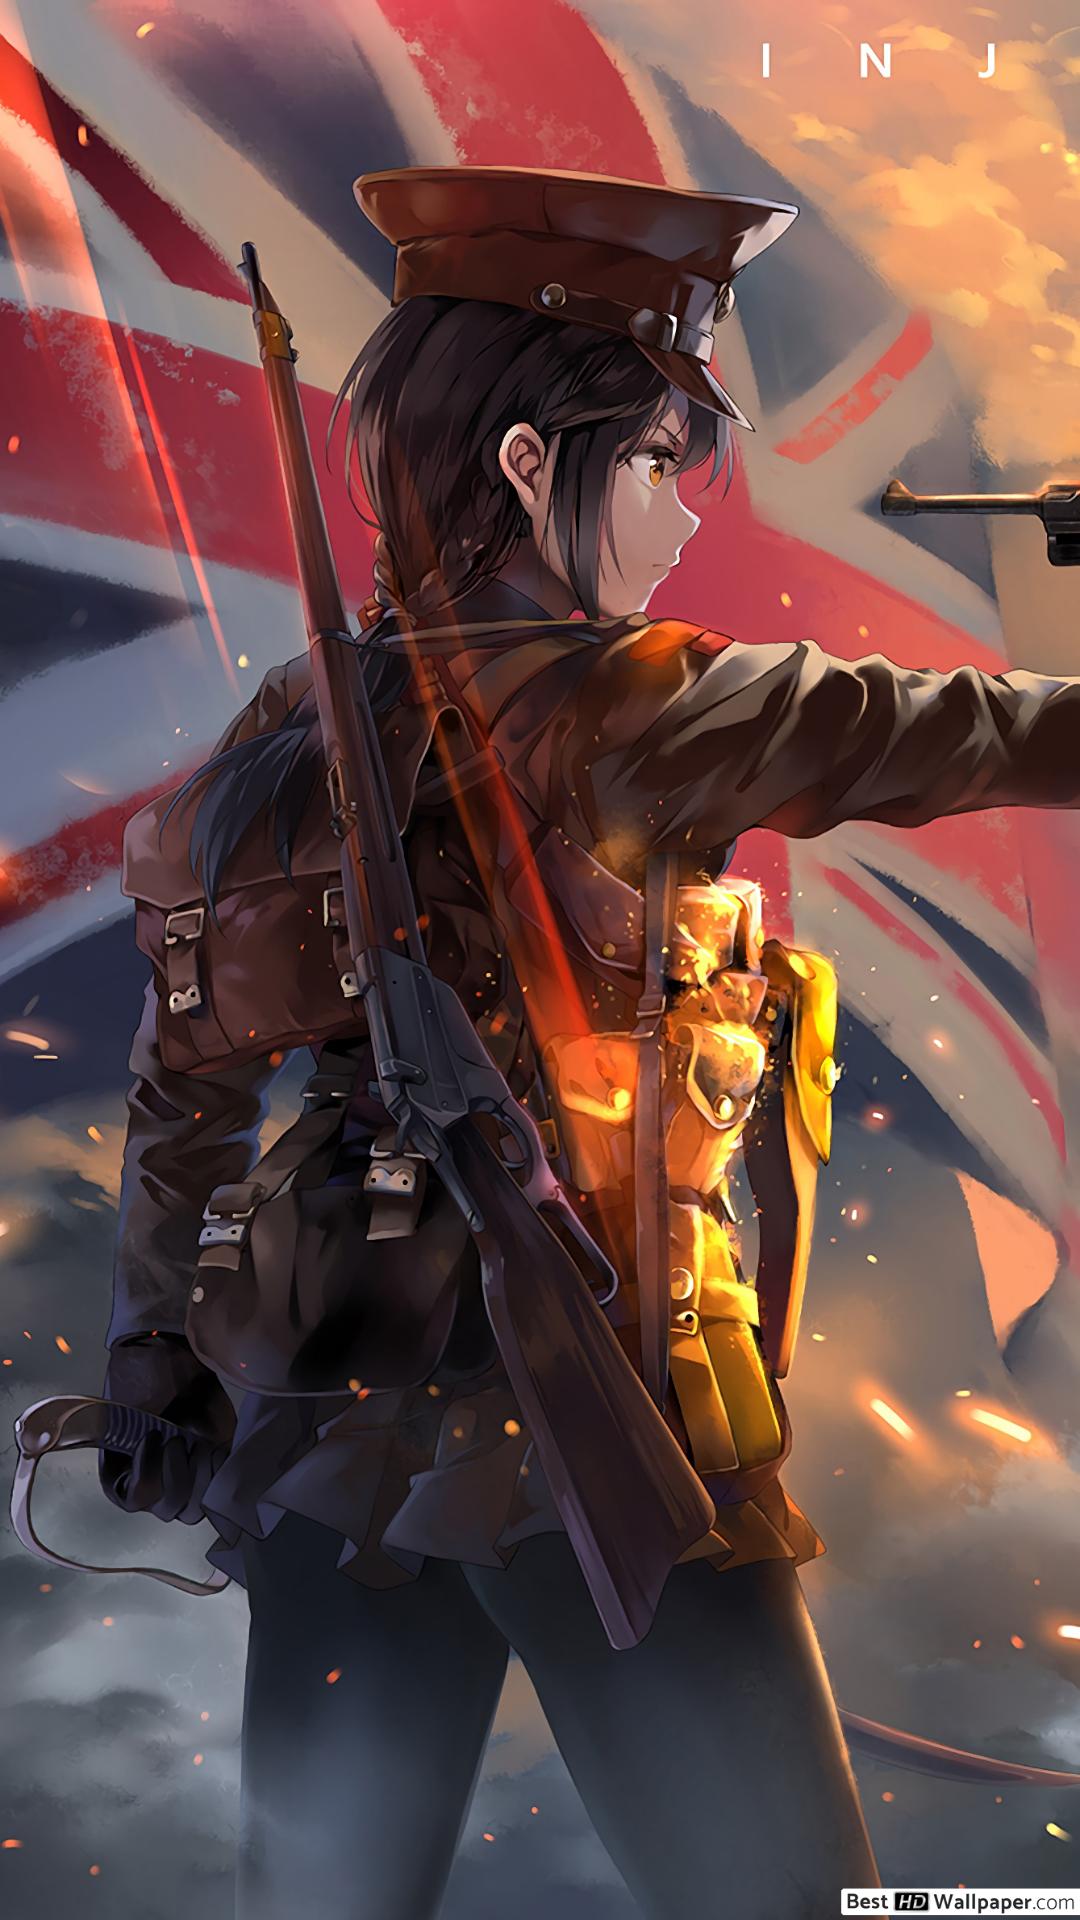 Saber on Battlefield Anime Live Wallpaper APK for Android Download